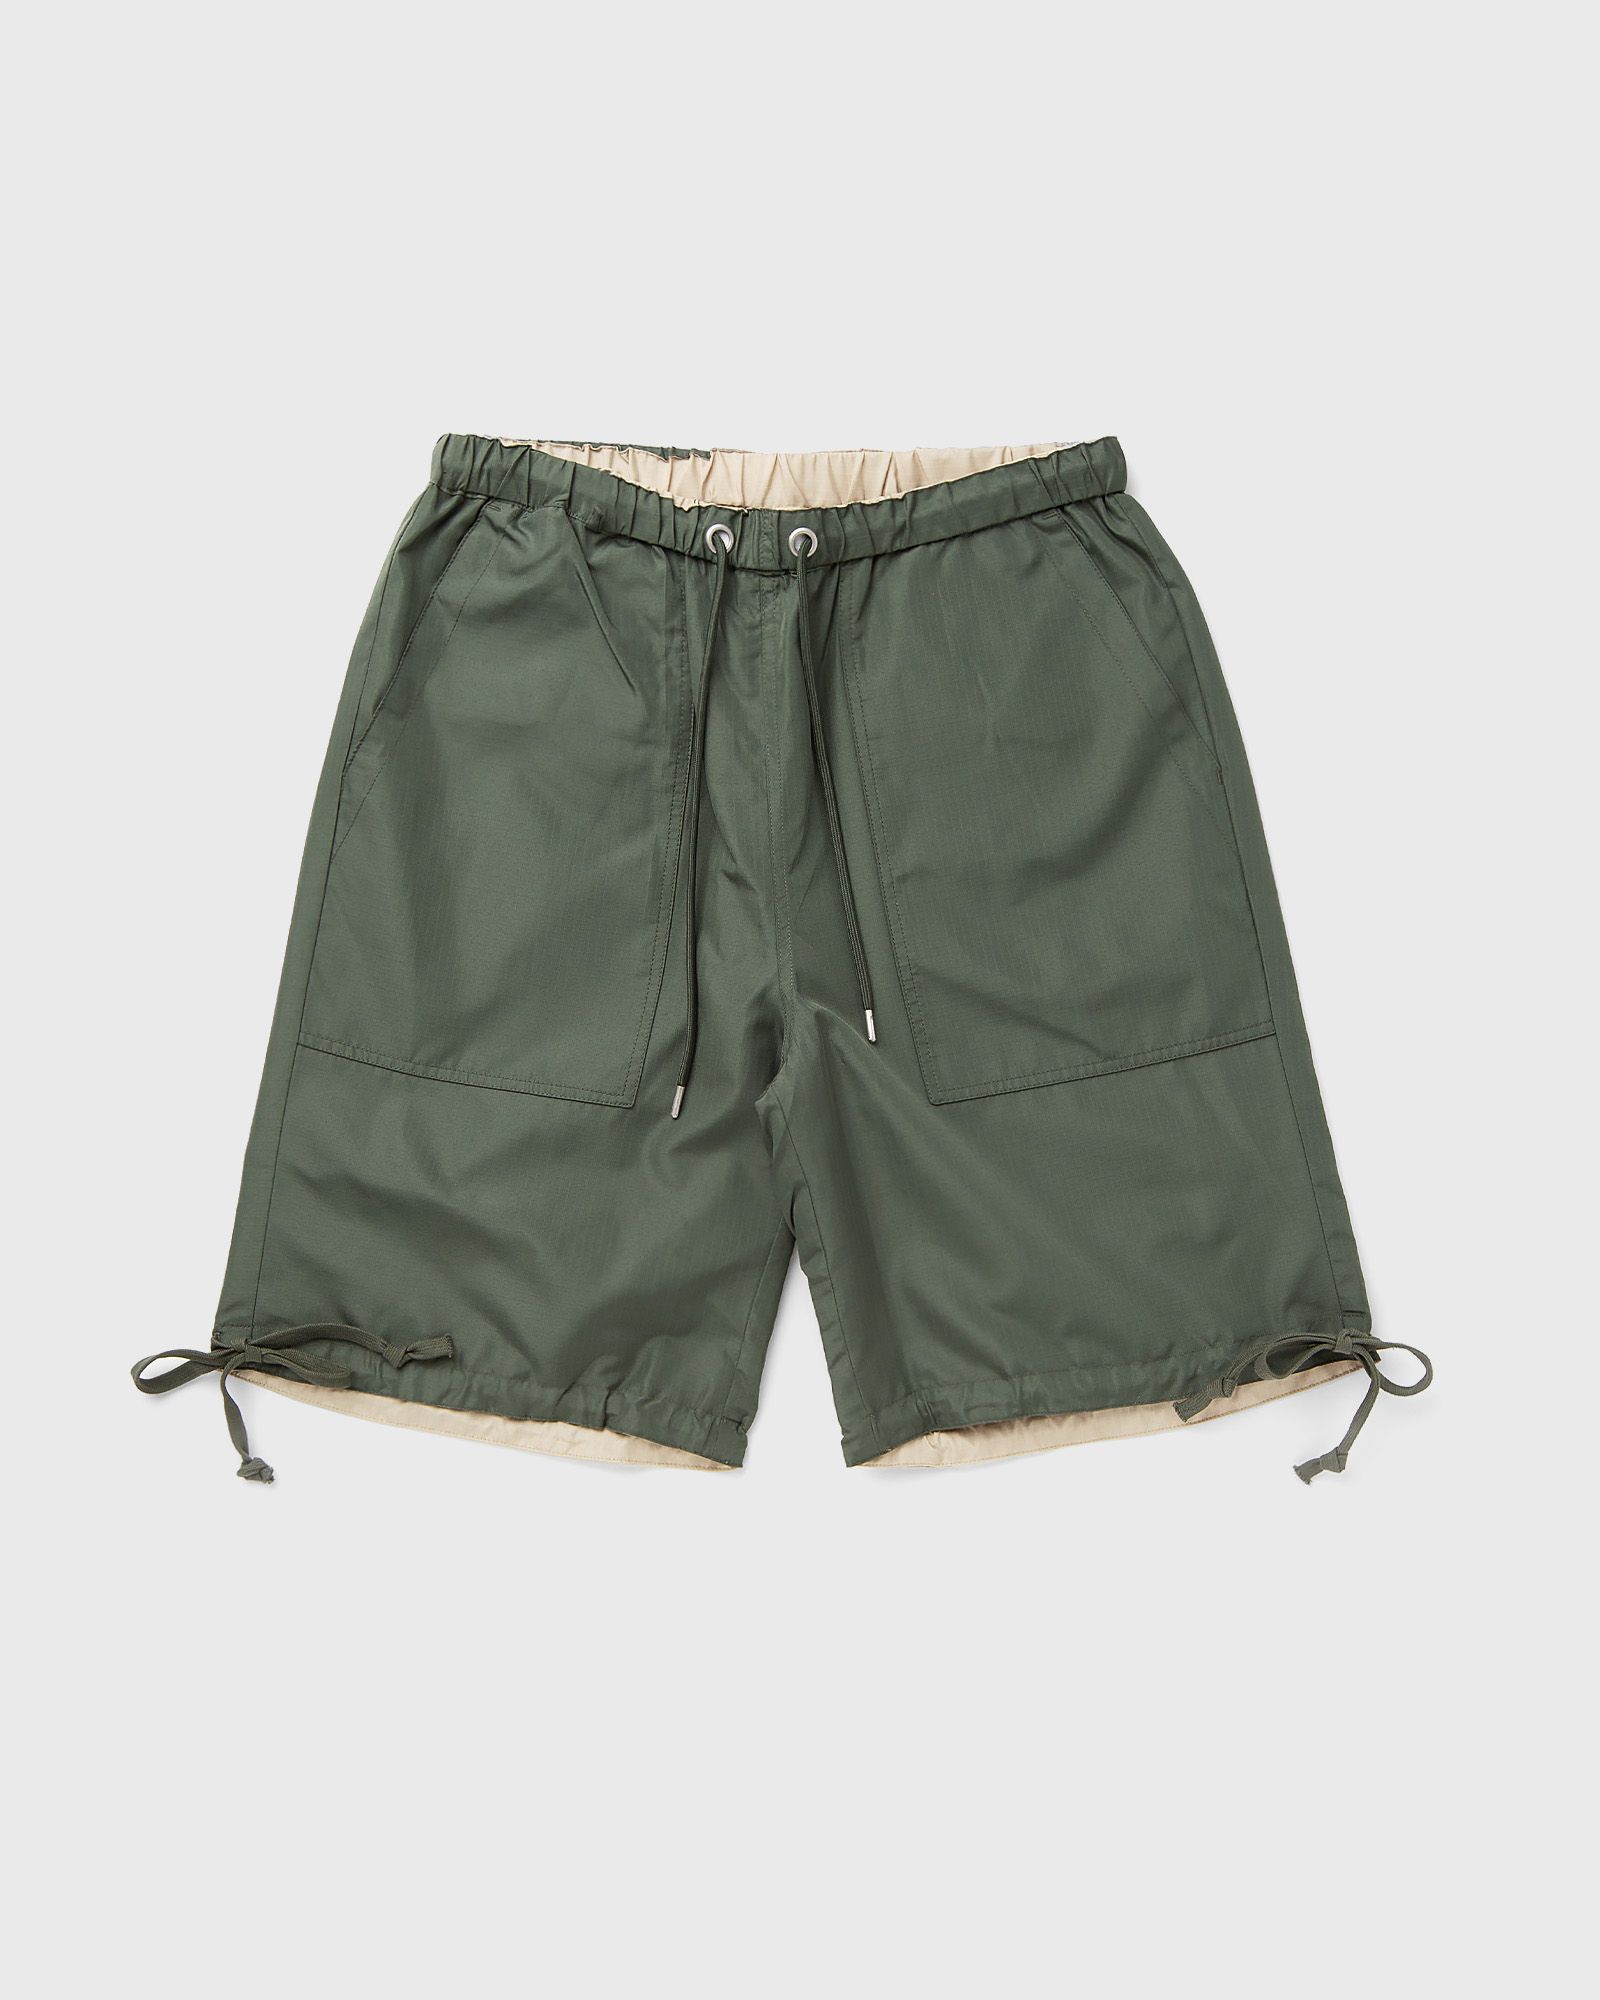 Taion - military rvs short pants men casual shorts green in größe:xl